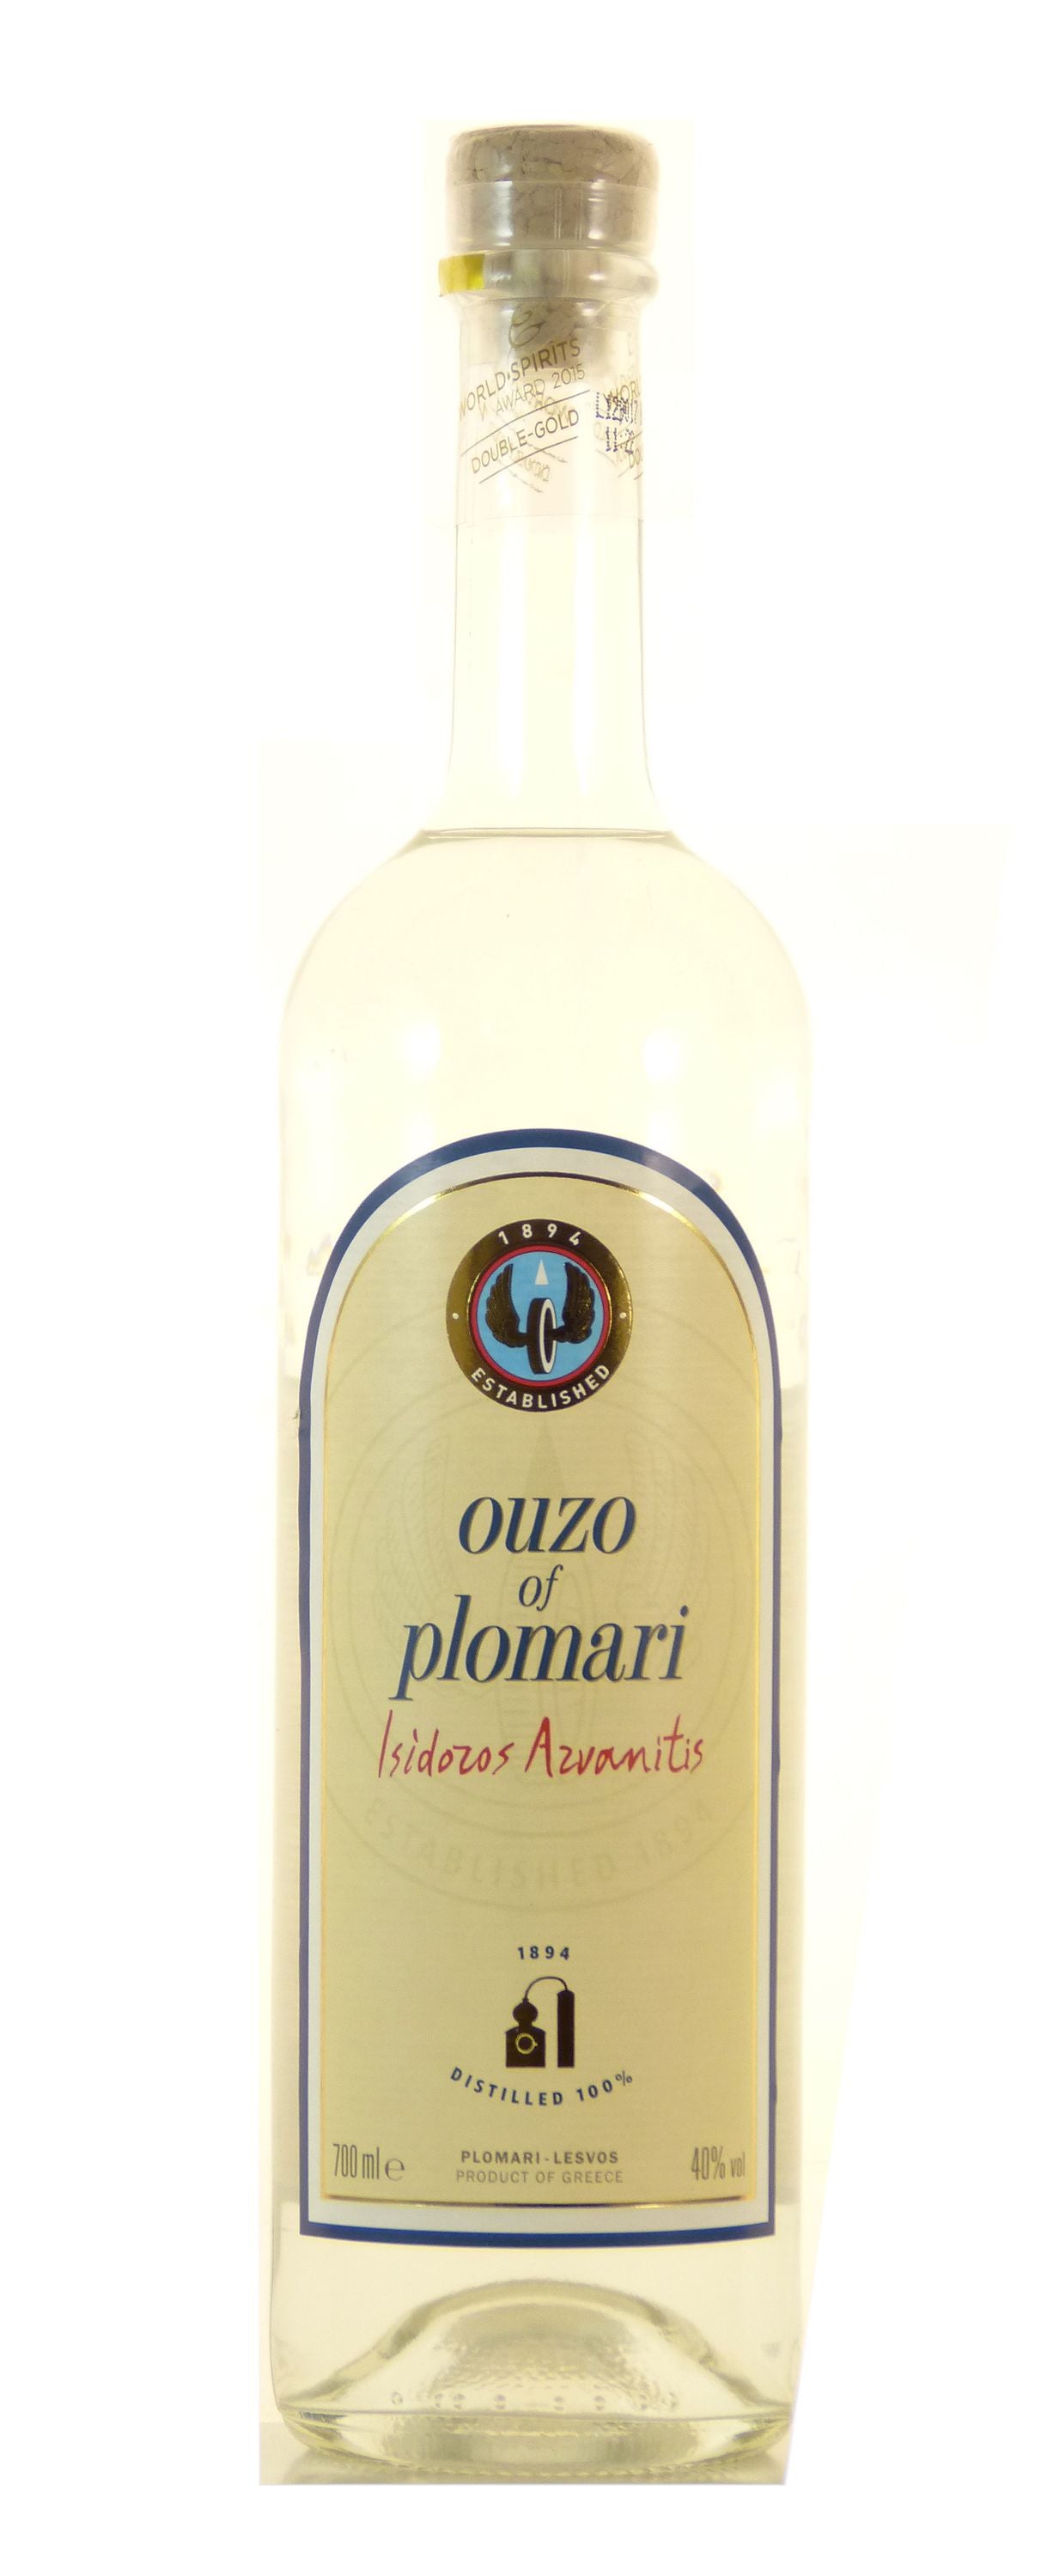 Ouzo of Plomari 0.7l, alc. 40% by volume, Greek spirit